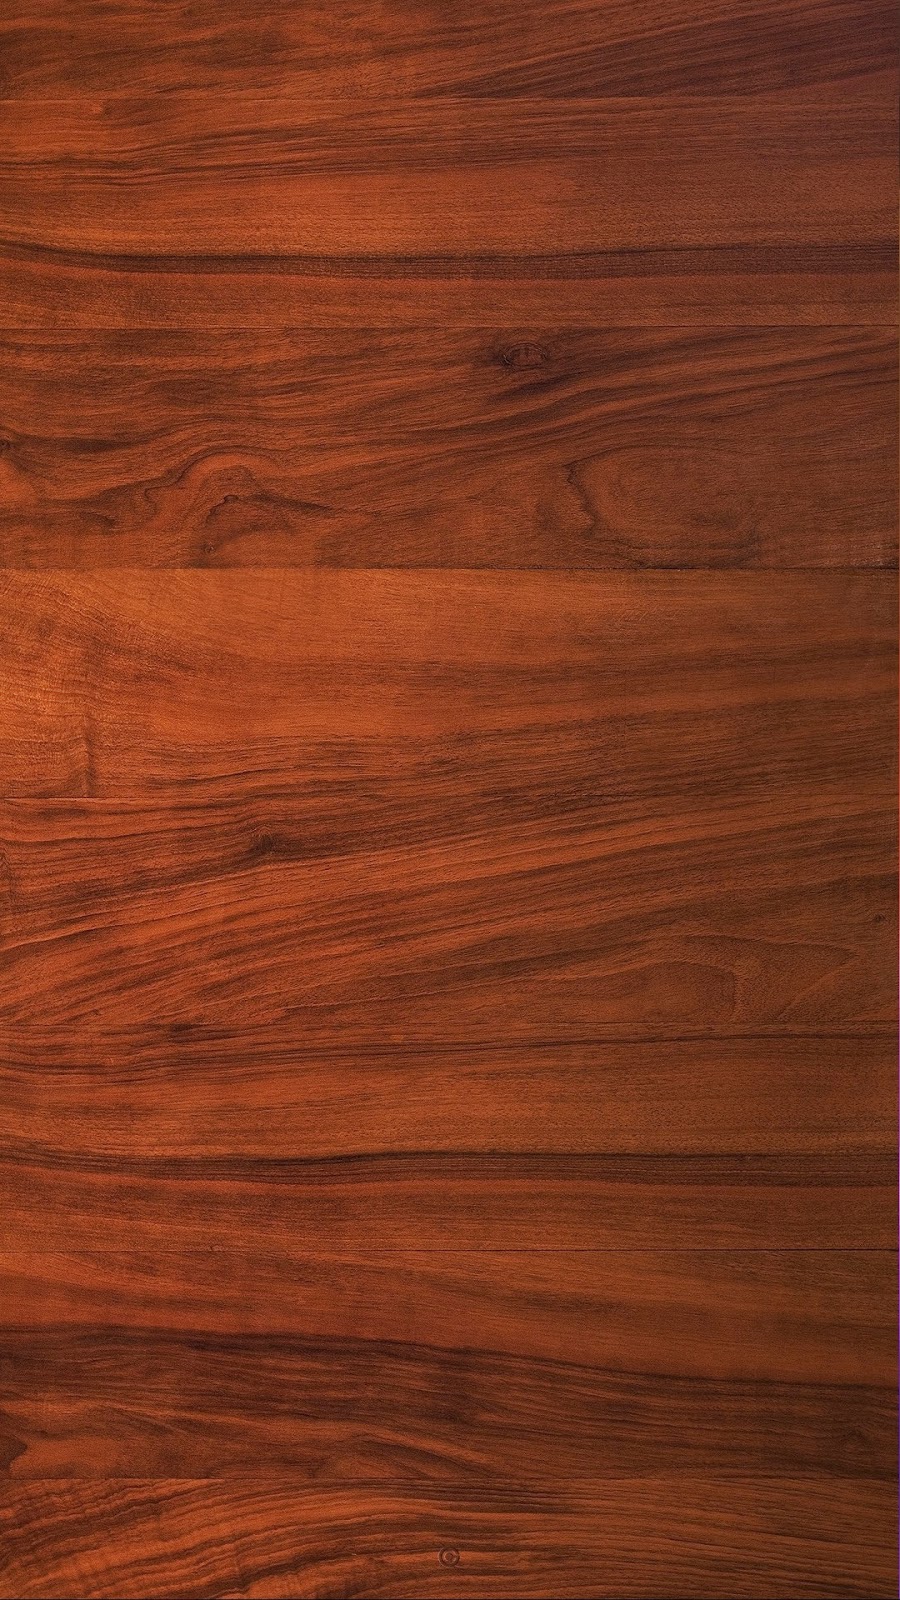 Cherry Wood Pattern Texture iPhone Plus HD Wallpaper